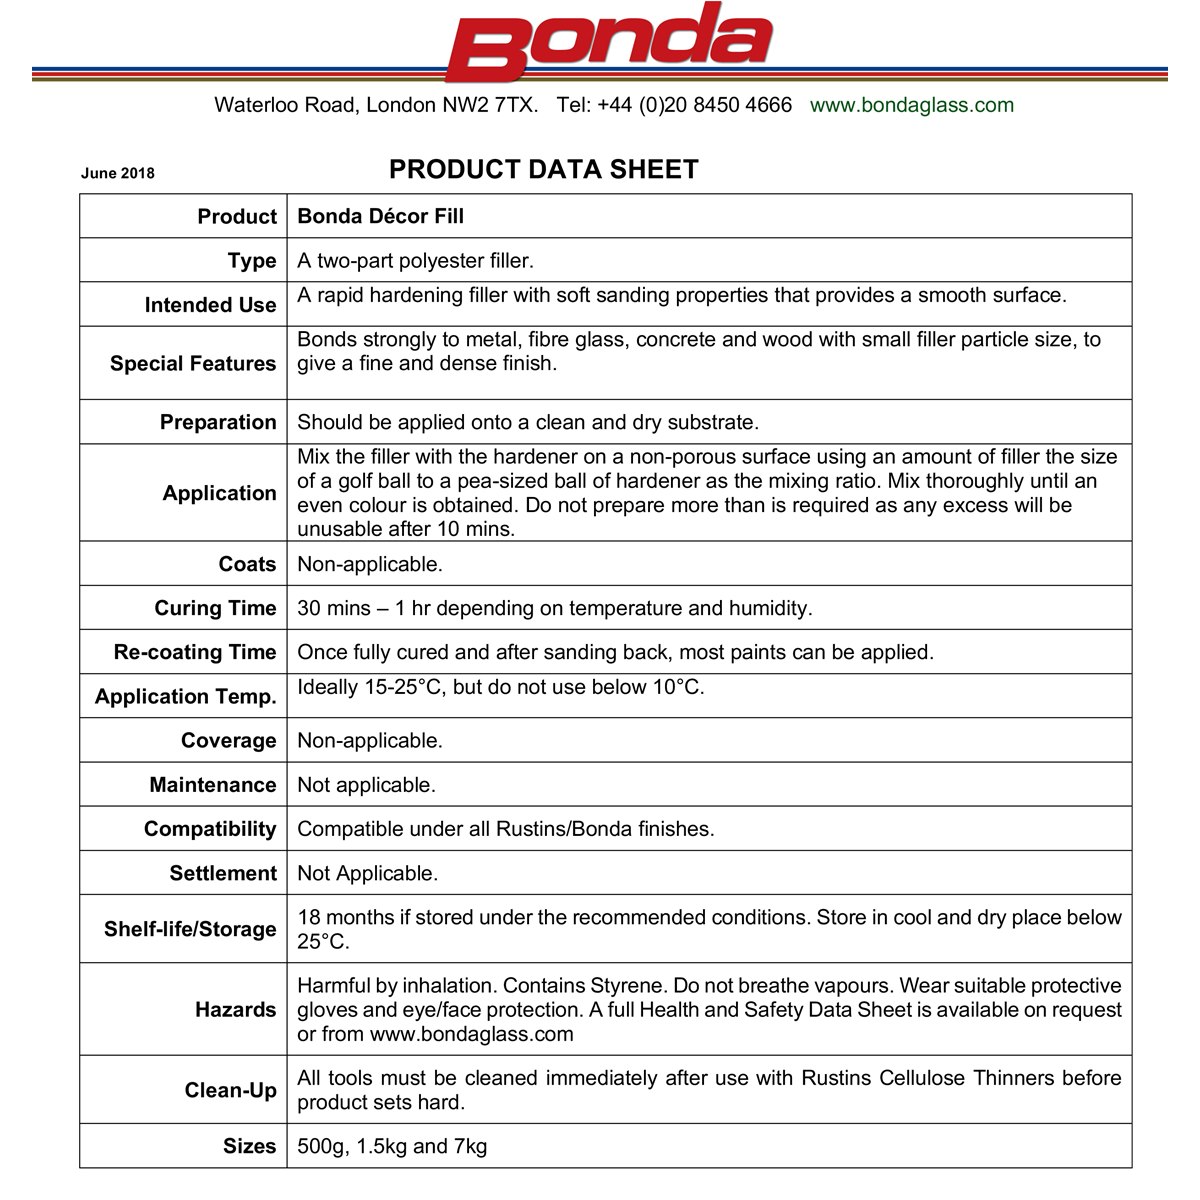 Bonda Decor Fill Usage Instructions